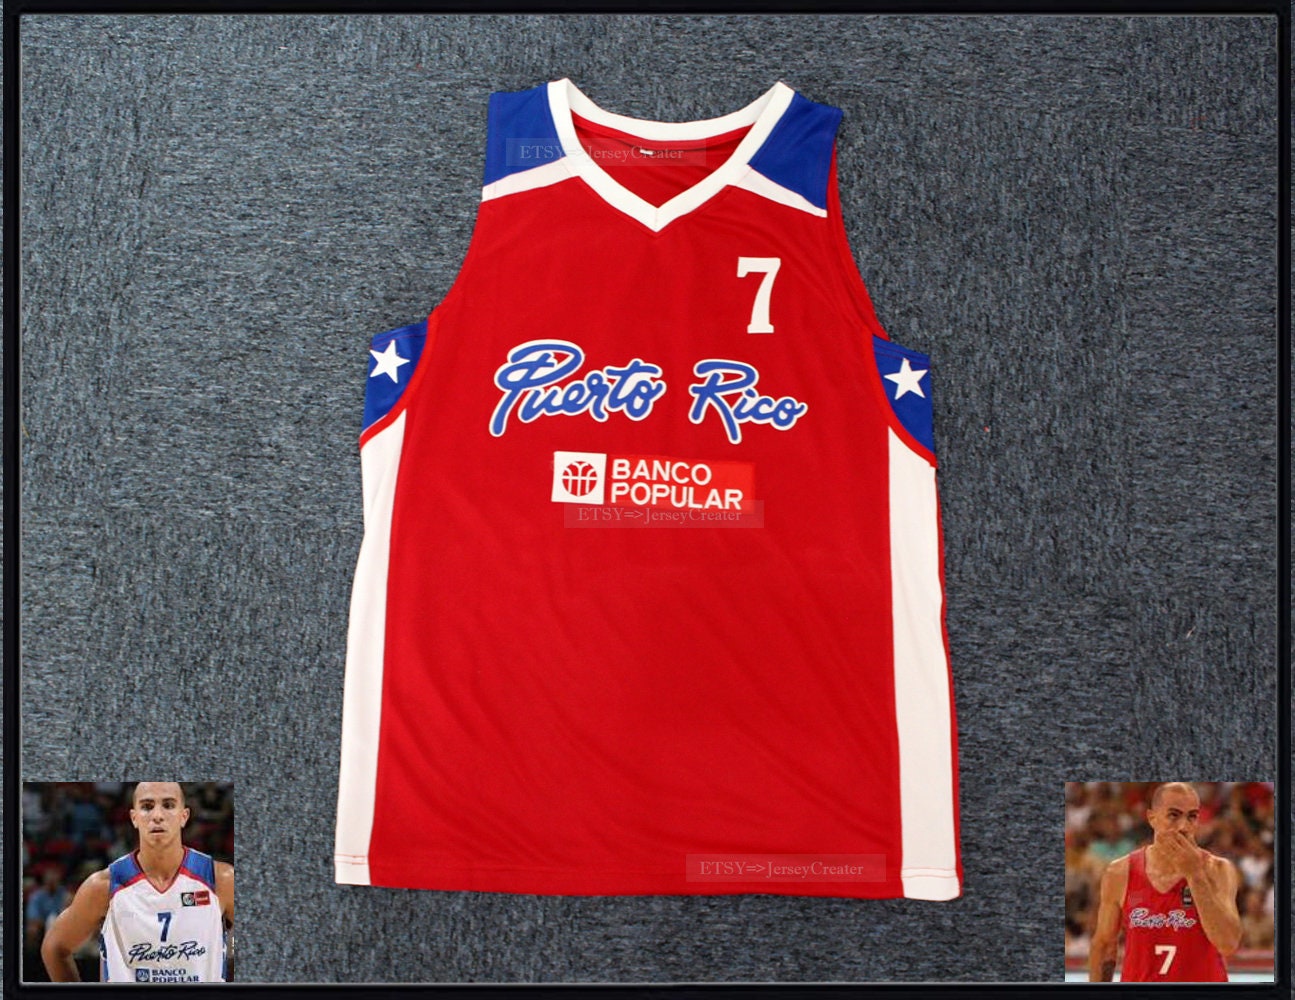 New Jordan Clarkson #6 Team Pilipinas Basketball Jersey Philippines Patch  Sewn 